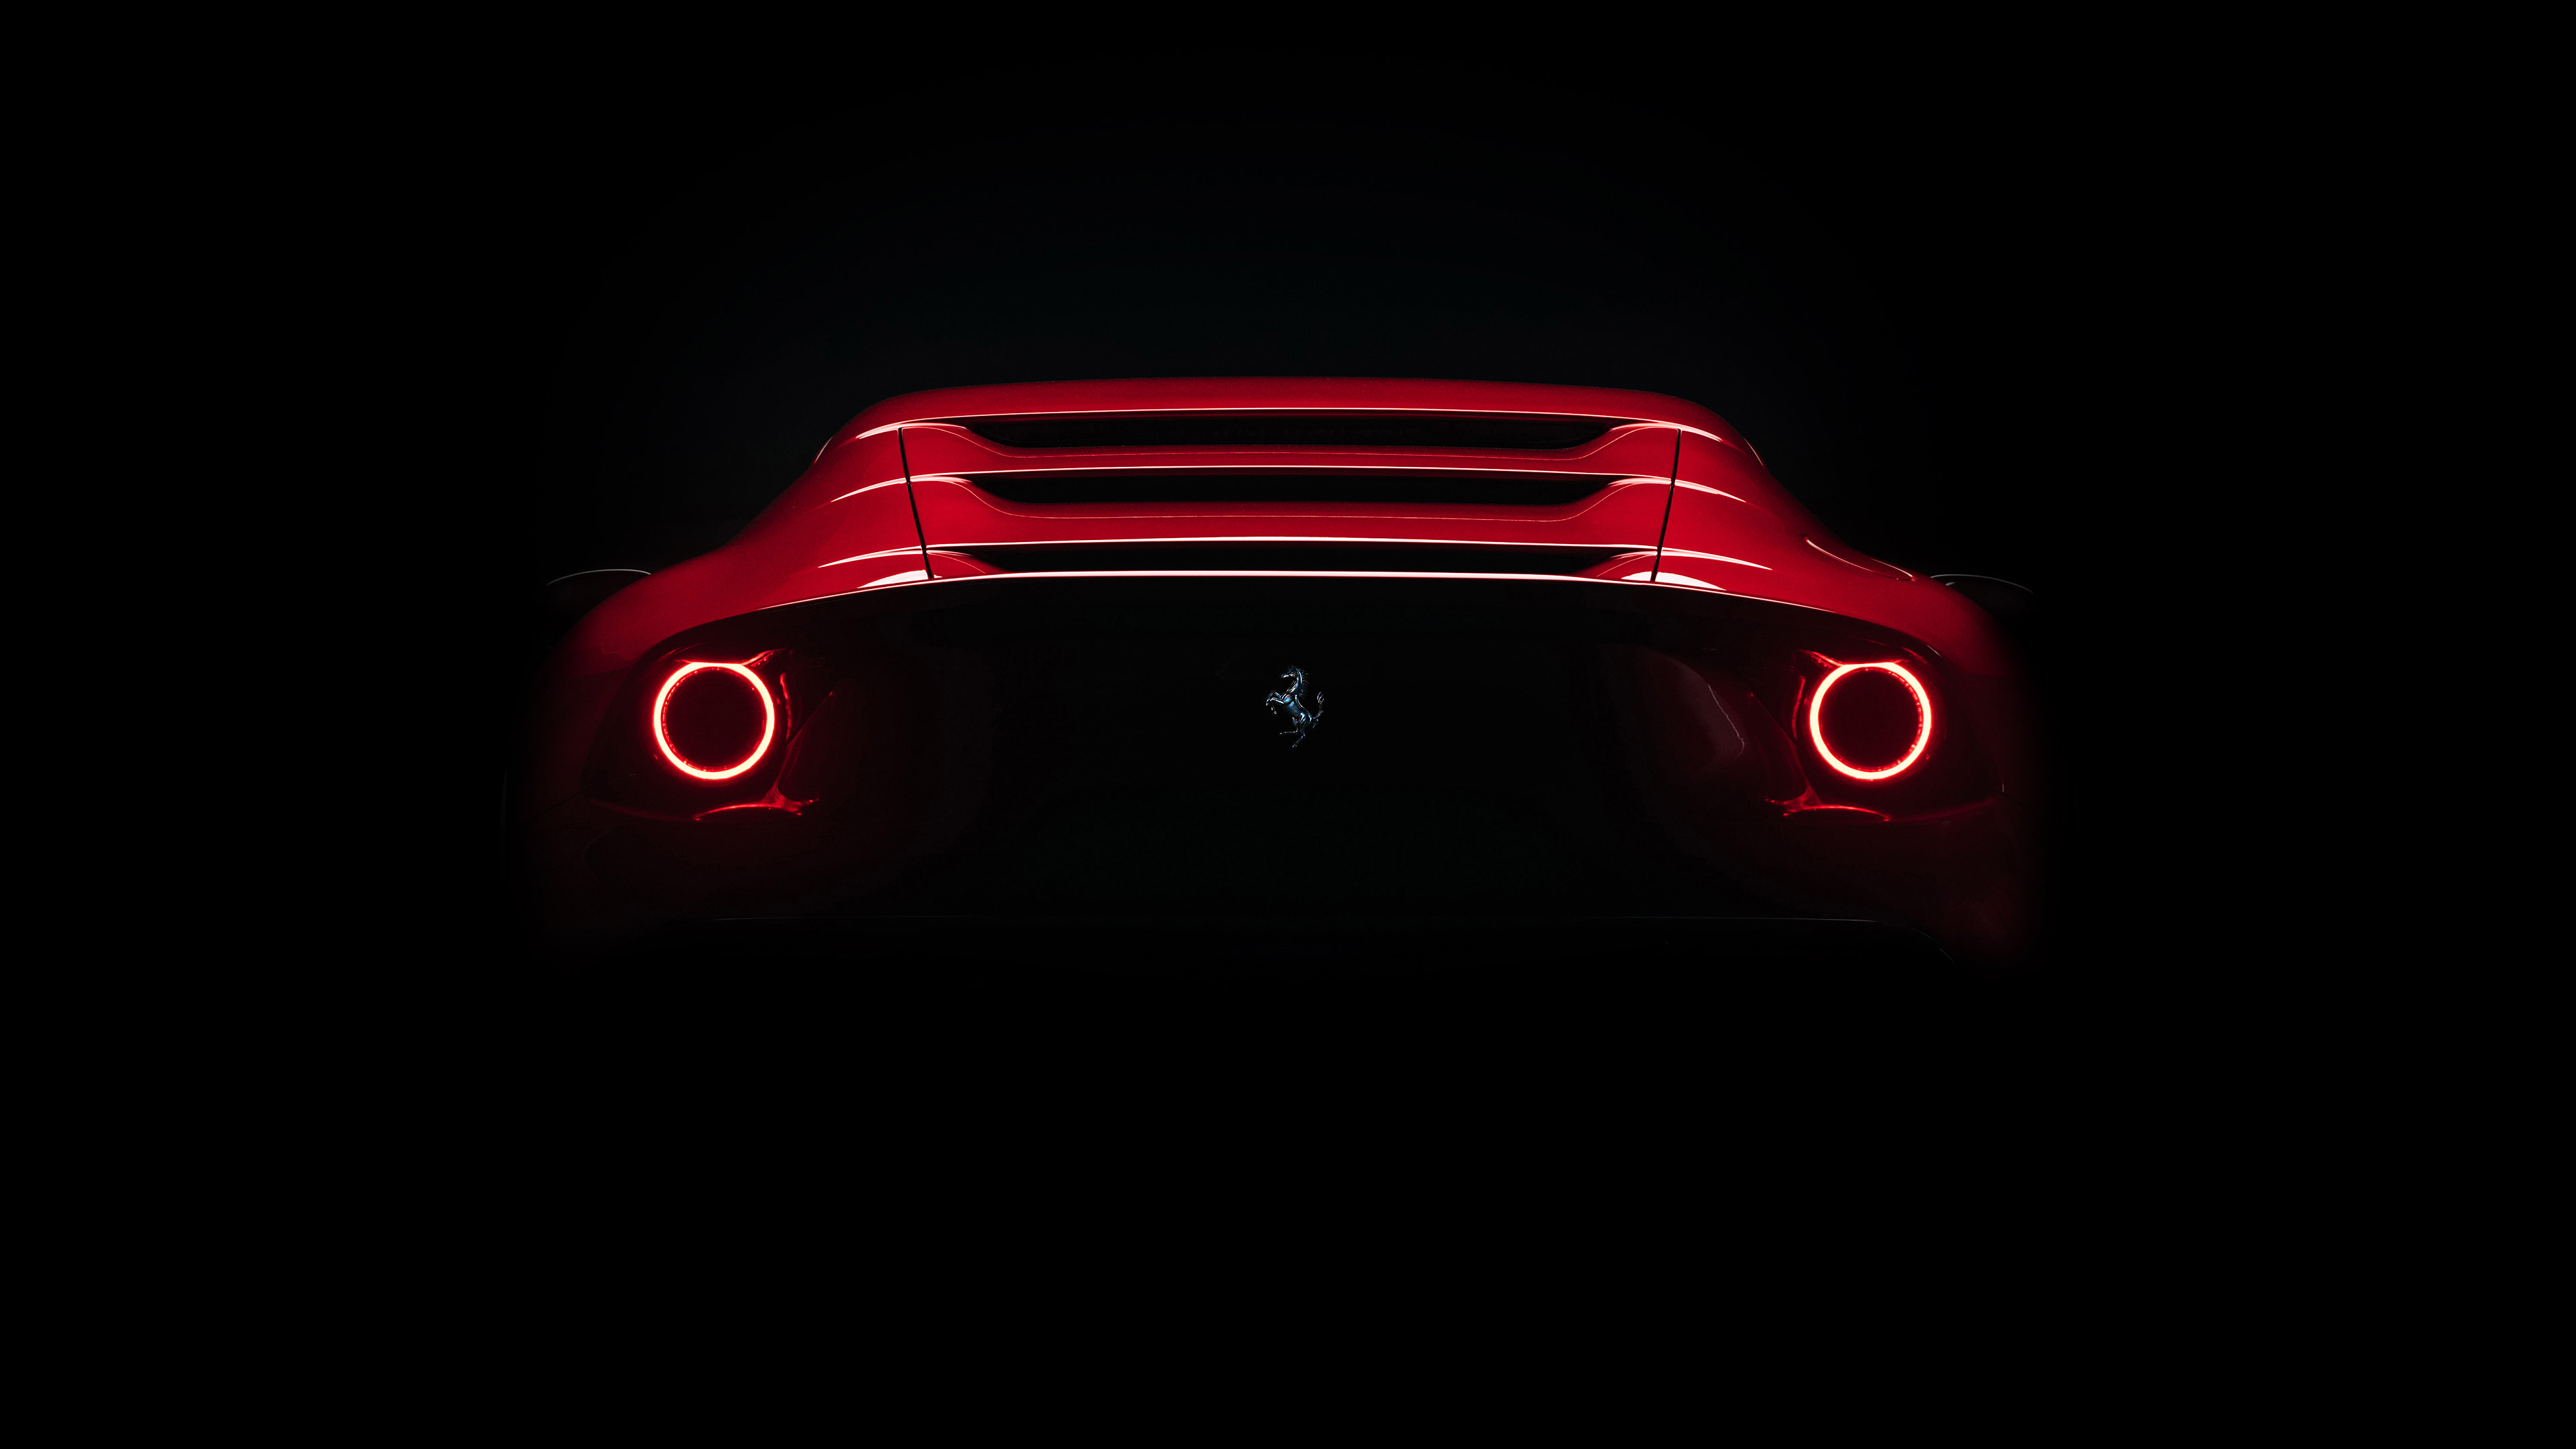  2020 Ferrari Omologata Wallpaper.